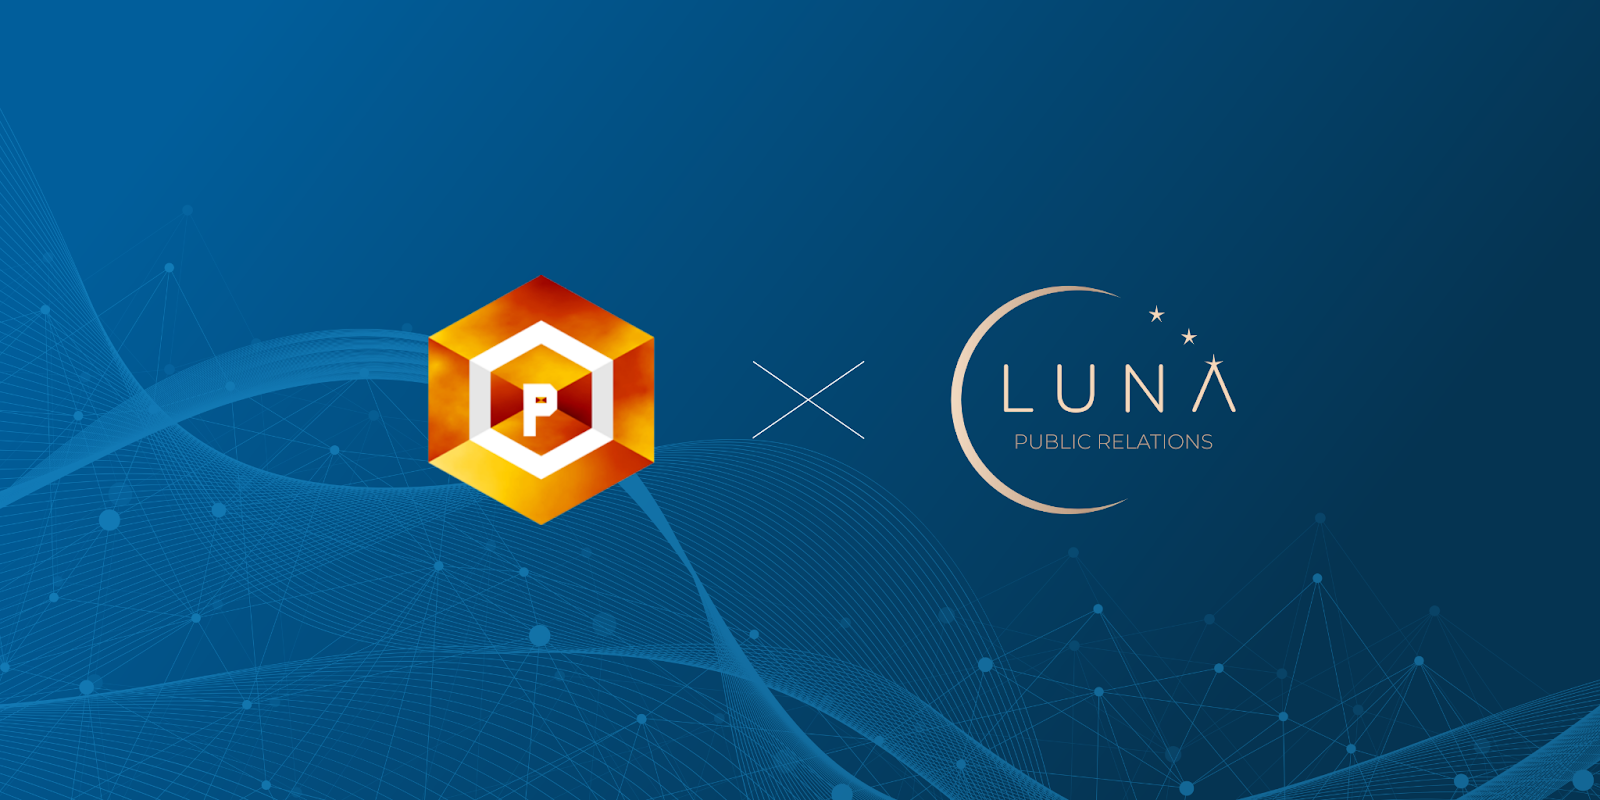 Privateum Partners With Luna PR to Promote FinTech Platform